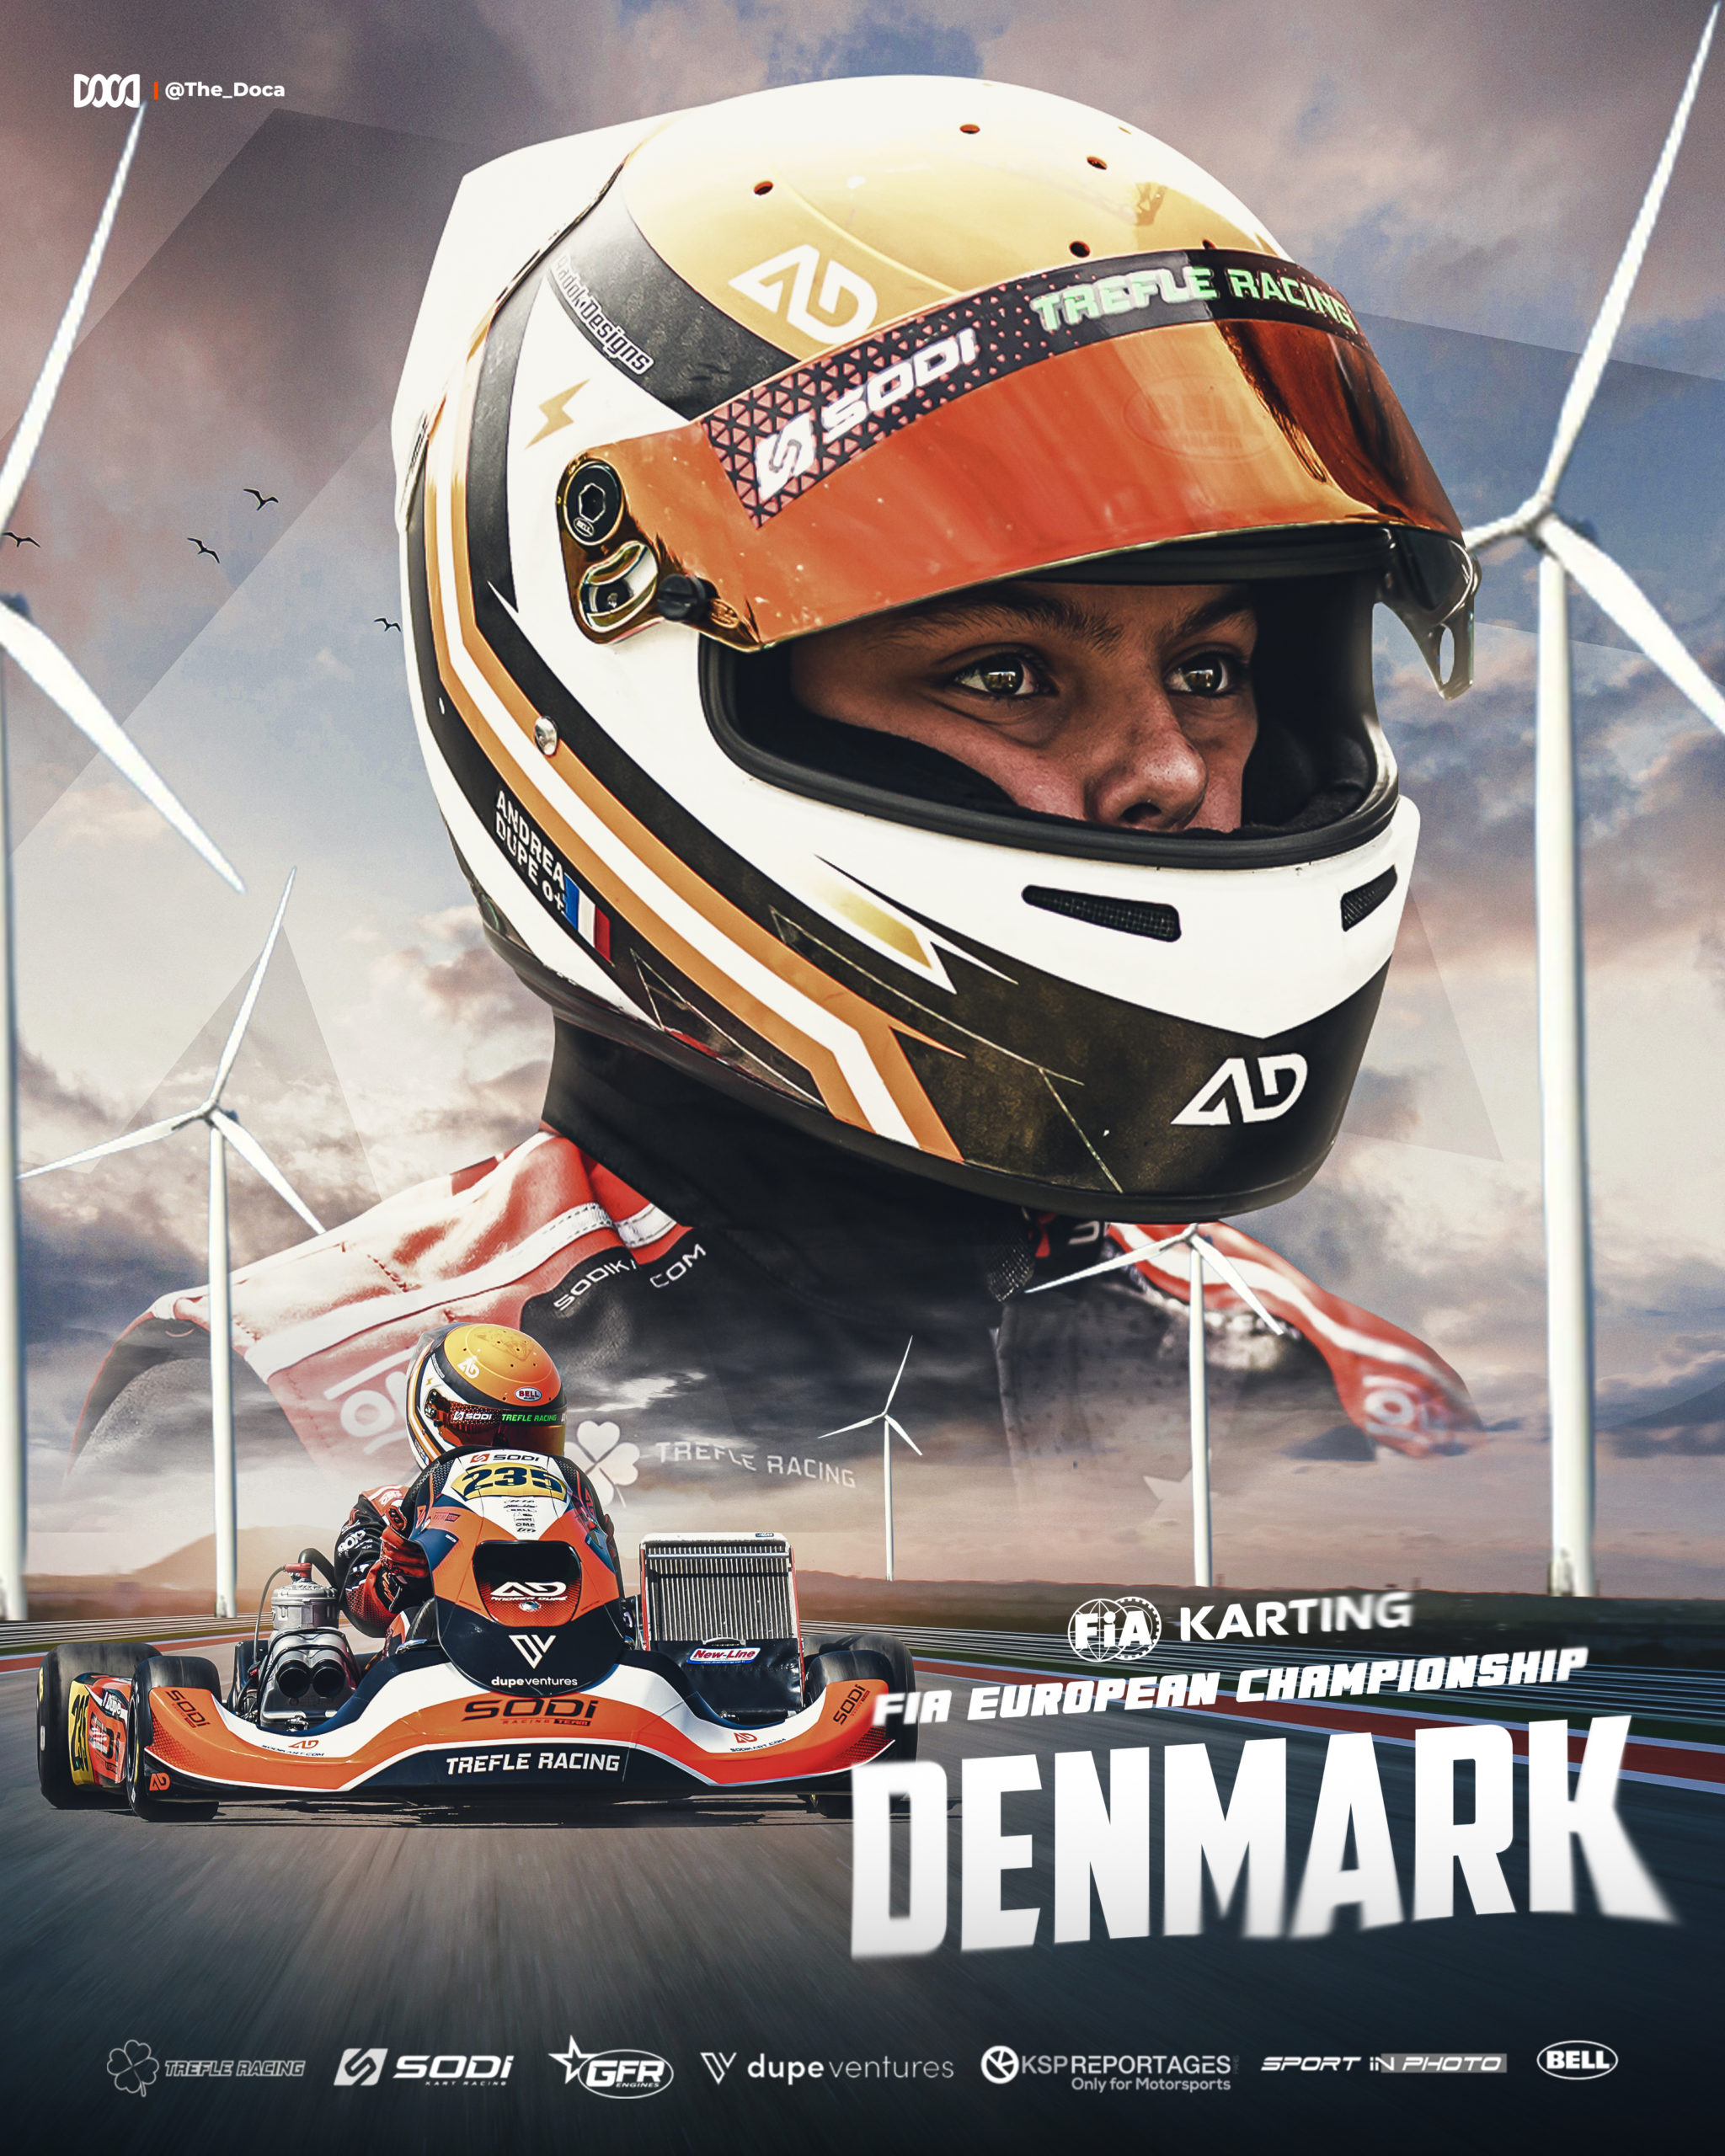 Dupe-FIA-Denmark